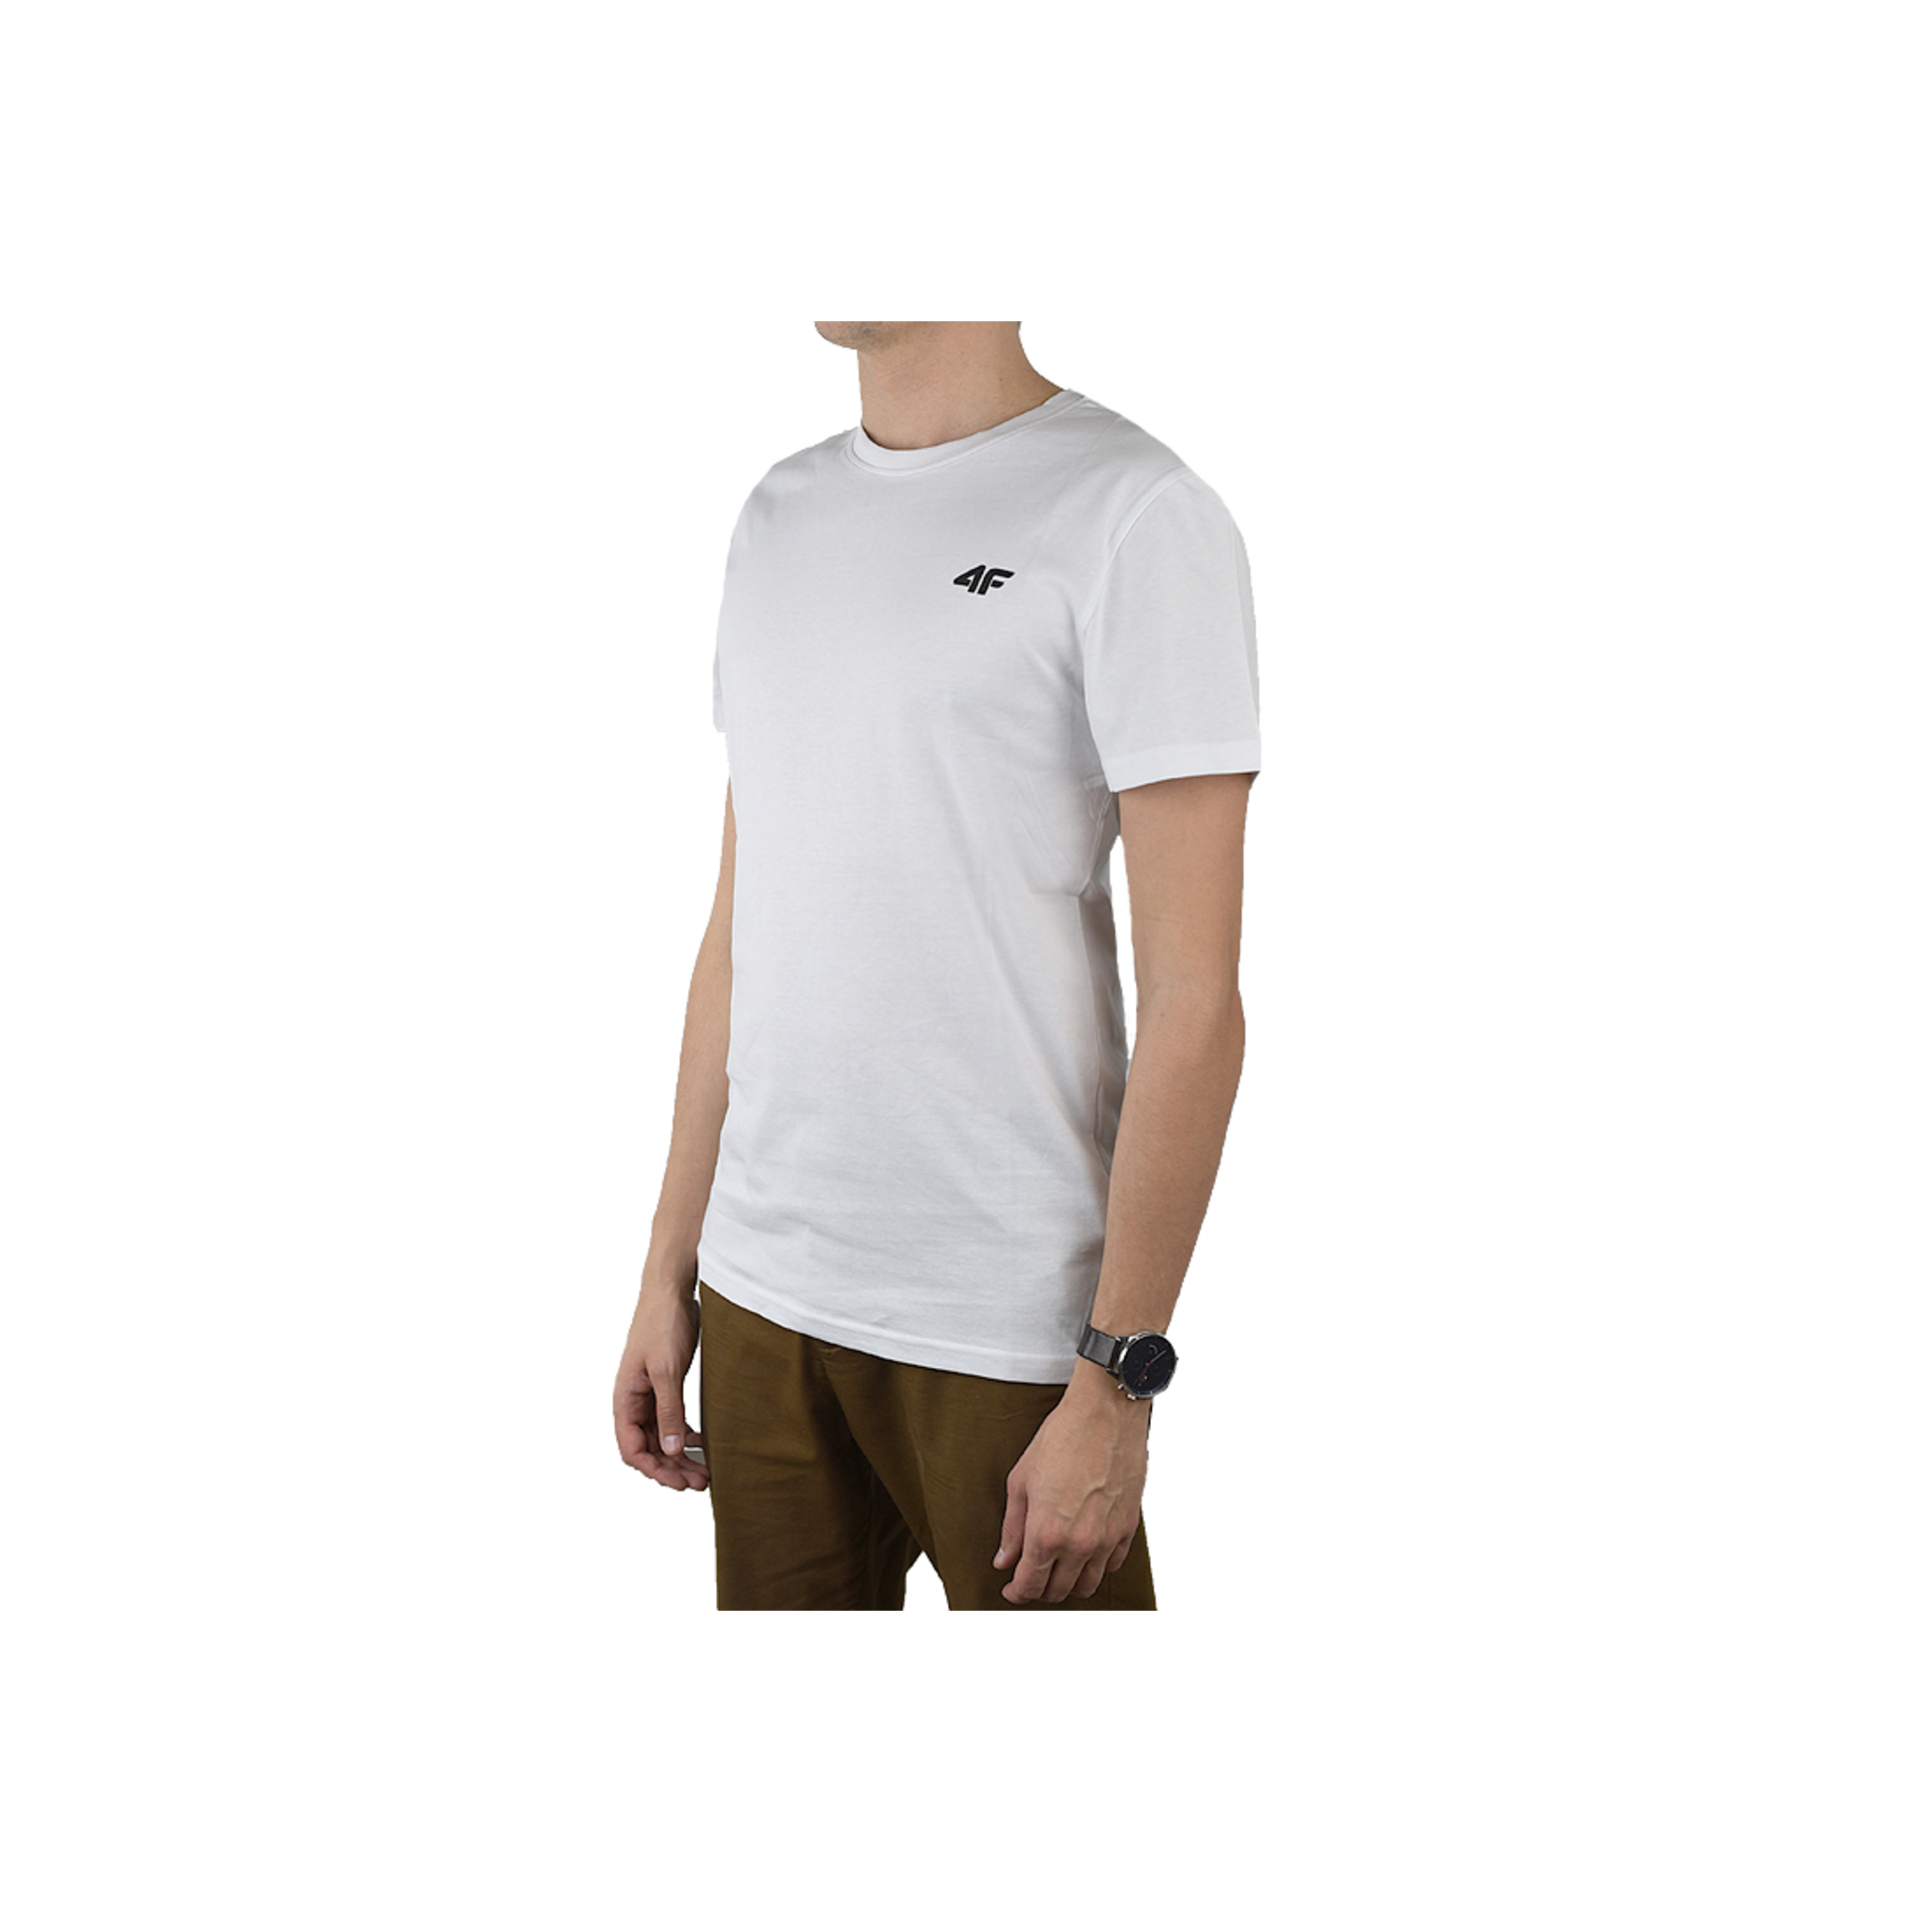 4f Men's T-shirt Nosh4-tsm003-10s - blanco - Hombres, Blanco, Camiseta  MKP